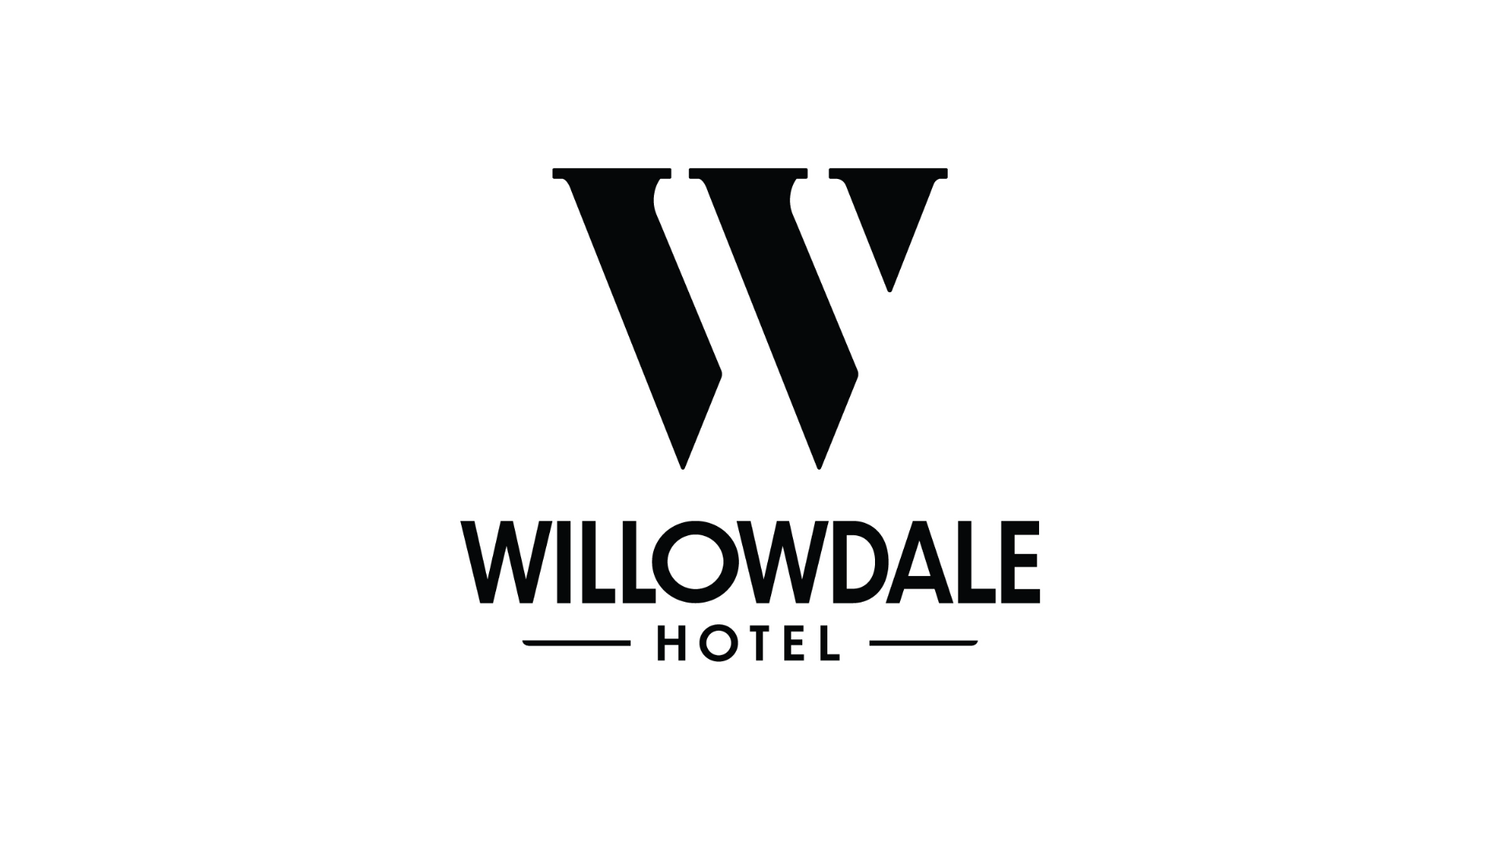 WILLOWDALE HOTEL LOGO